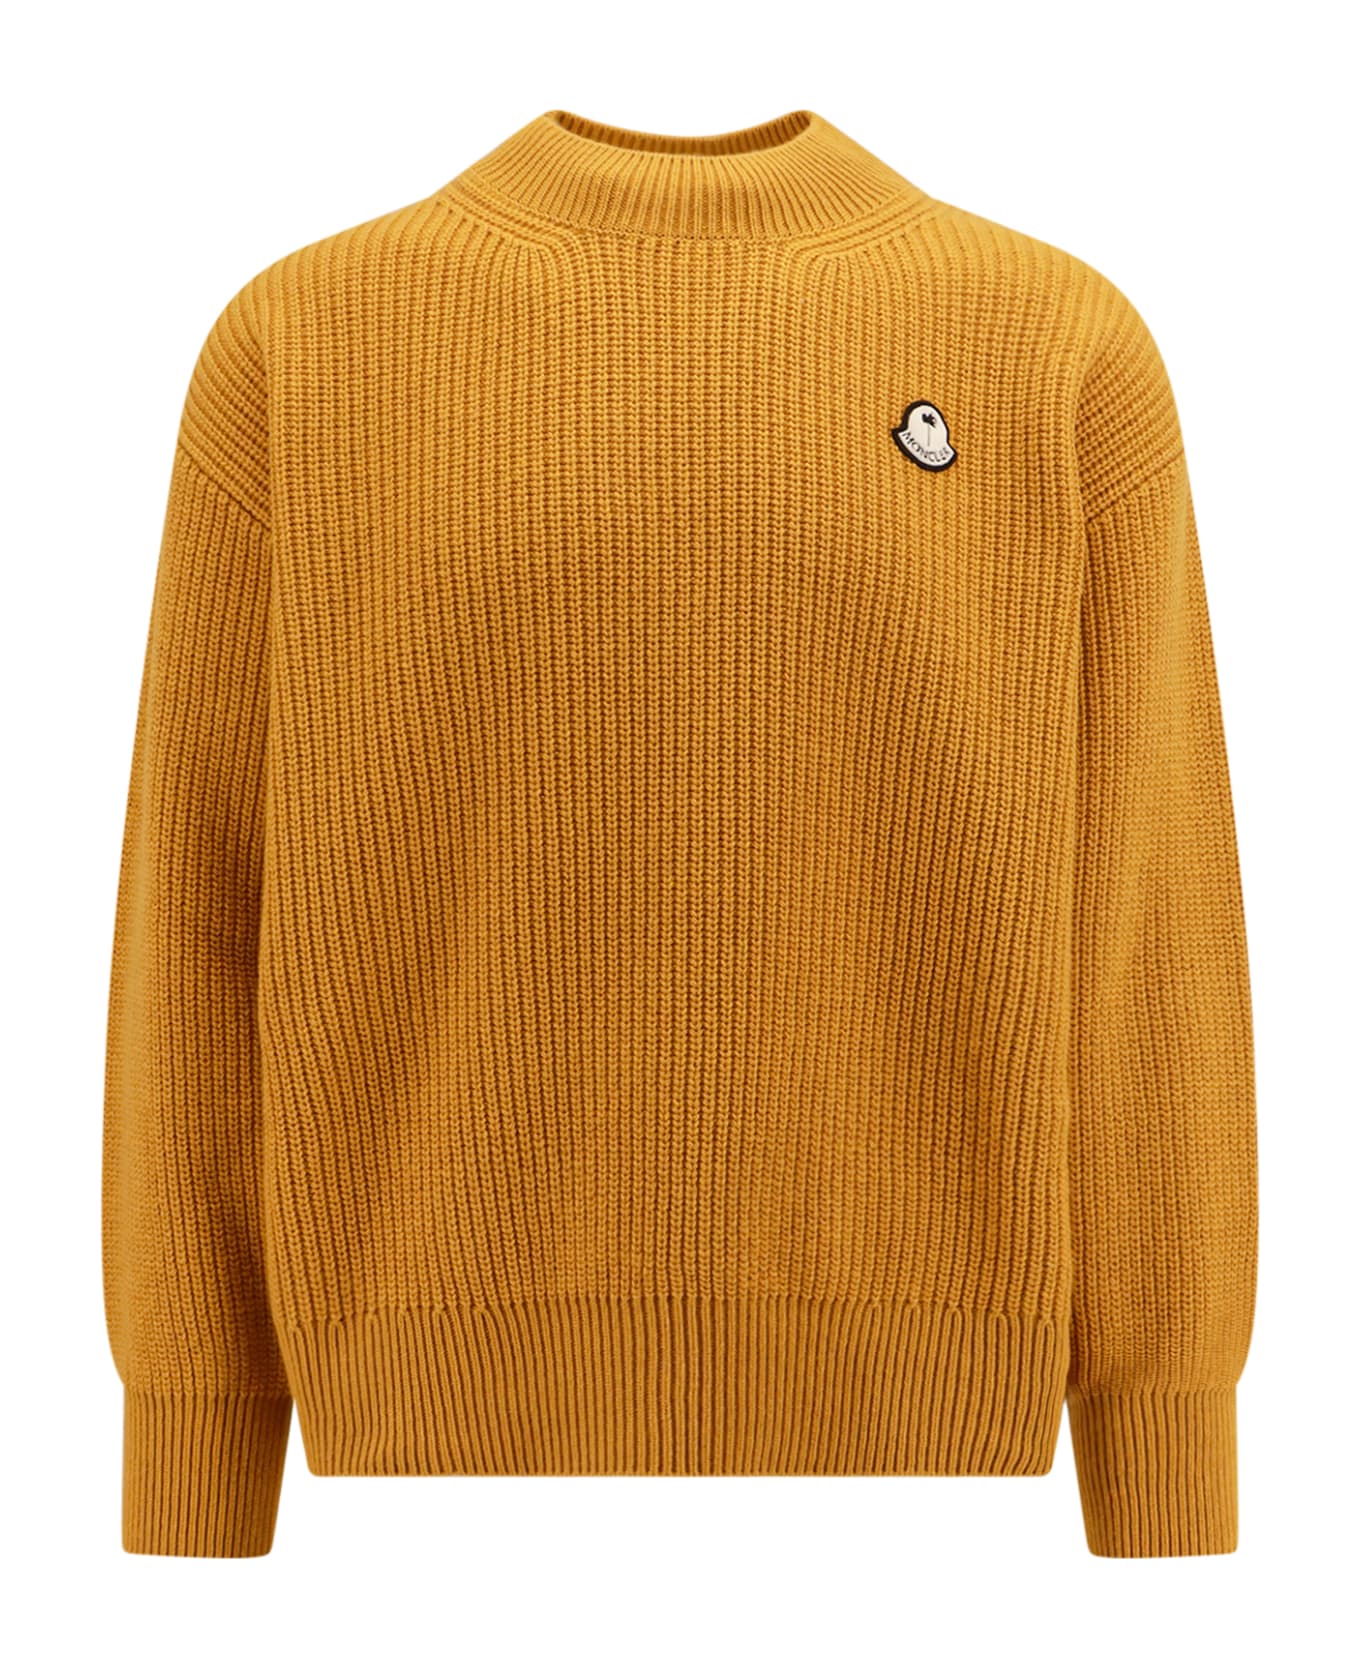 Moncler Genius Sweater - Yellow